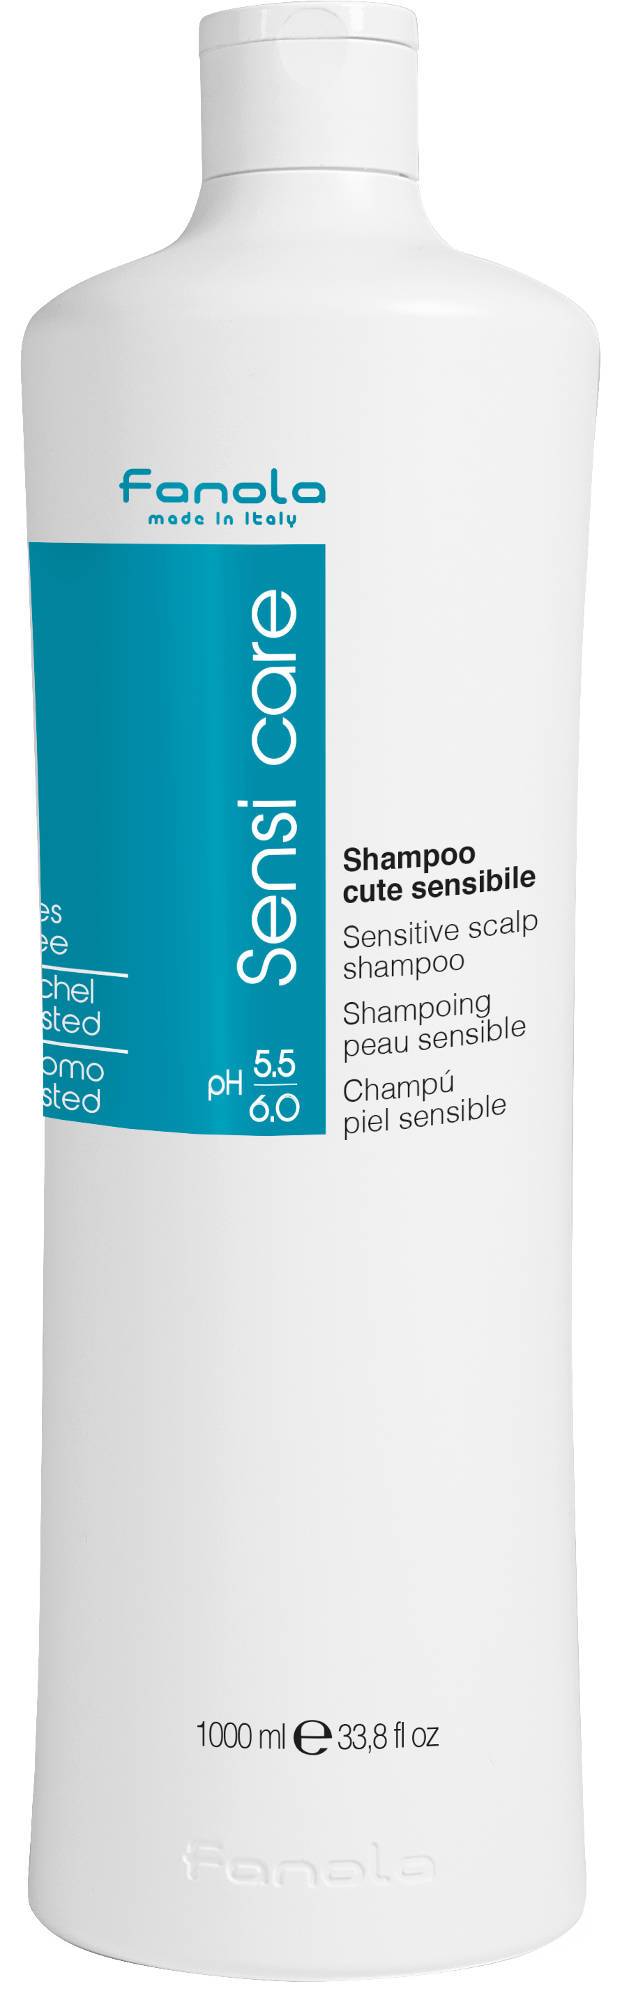 Fanola Sensi Care Sensitive Scalp Shampoo, 350 ml Fanola 1000 ml 